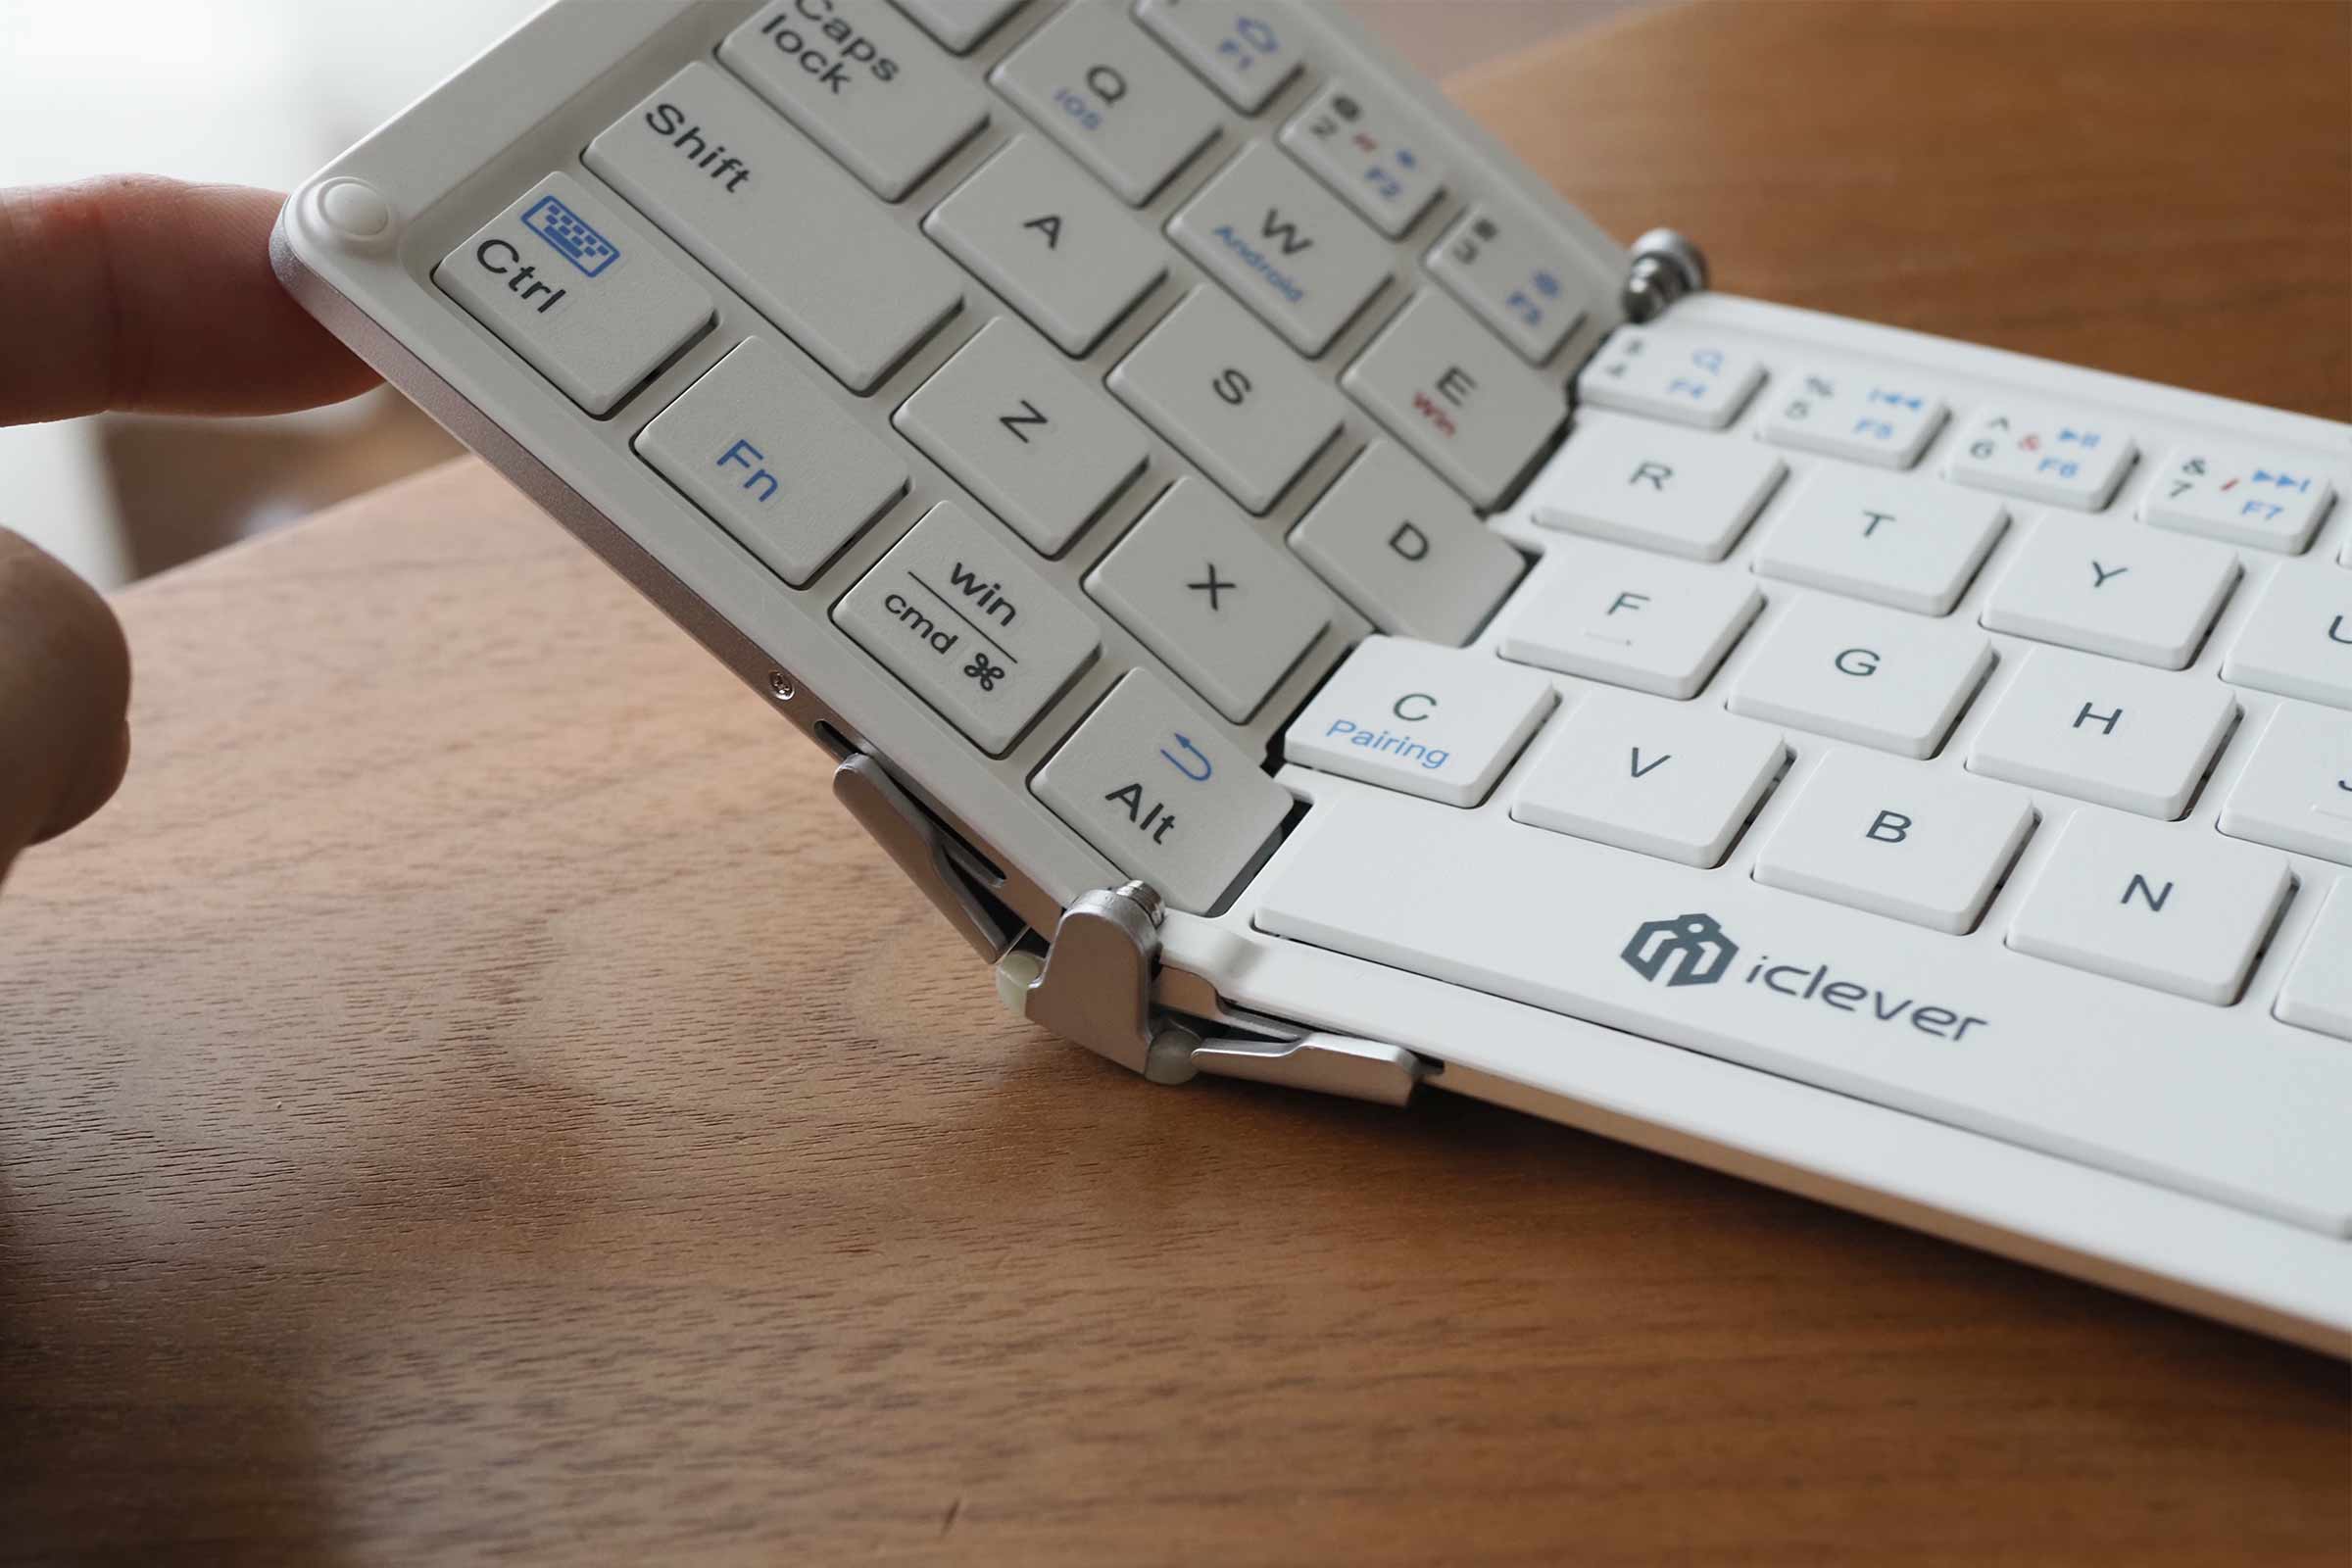 iclever,Bluetoothキーボード,iPad,iPad mini,コンパクト,薄い,安い,タッチパッド,軽い,頑丈